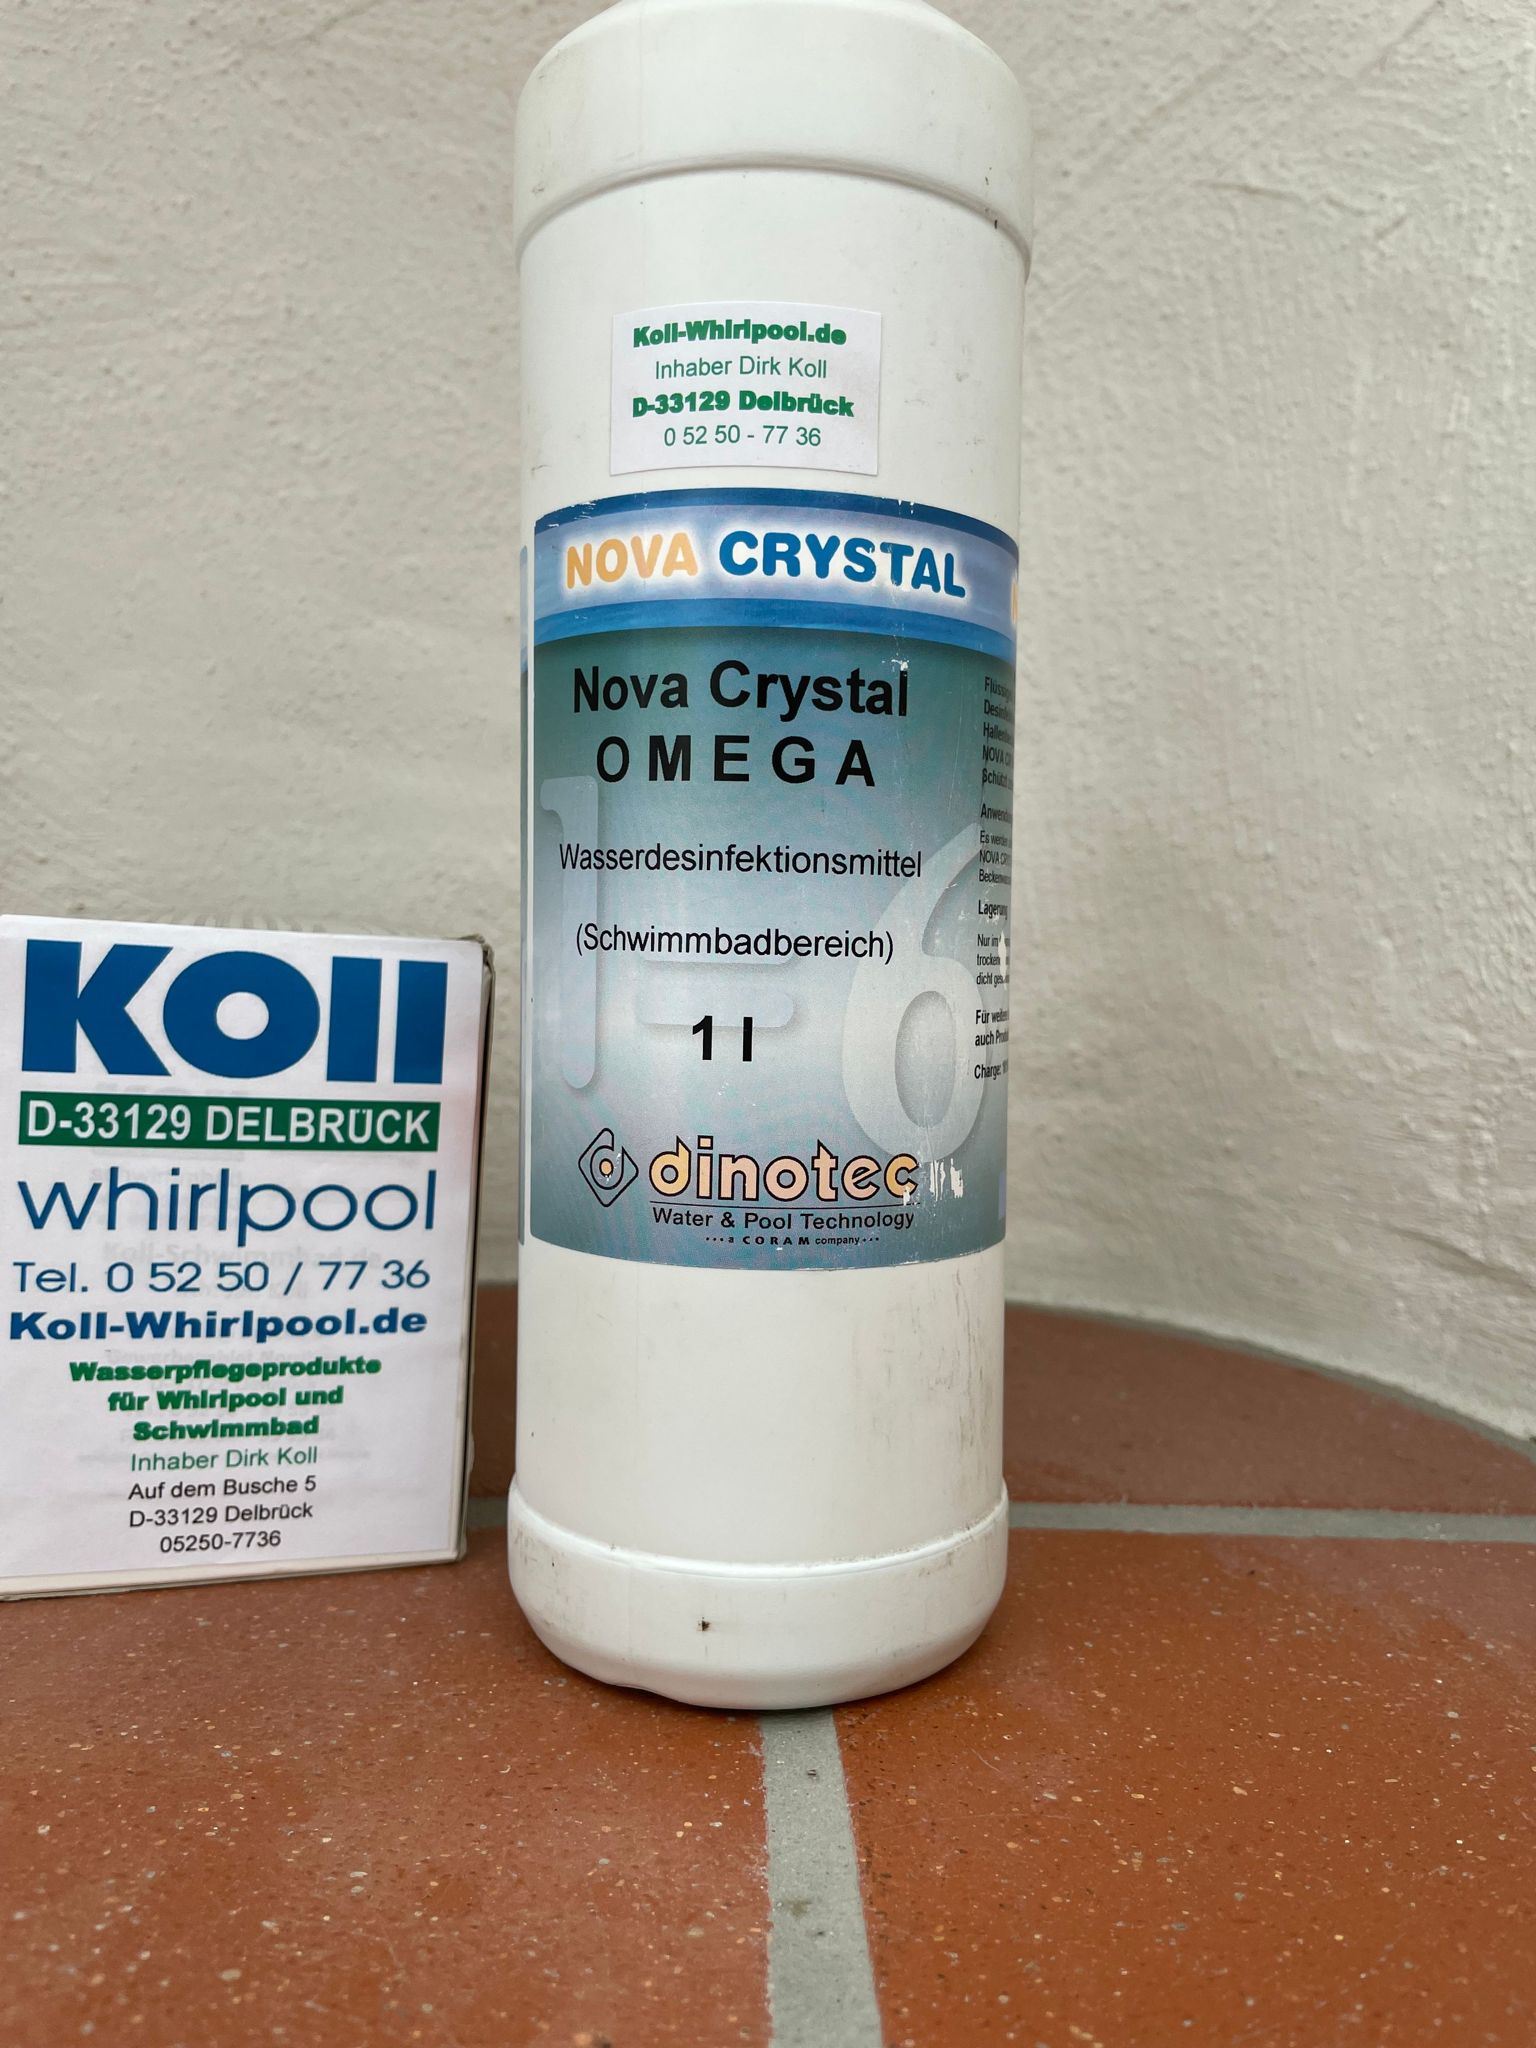 1050-420-00 Nova Crystal OMEGA 1l Koll-Dinotec